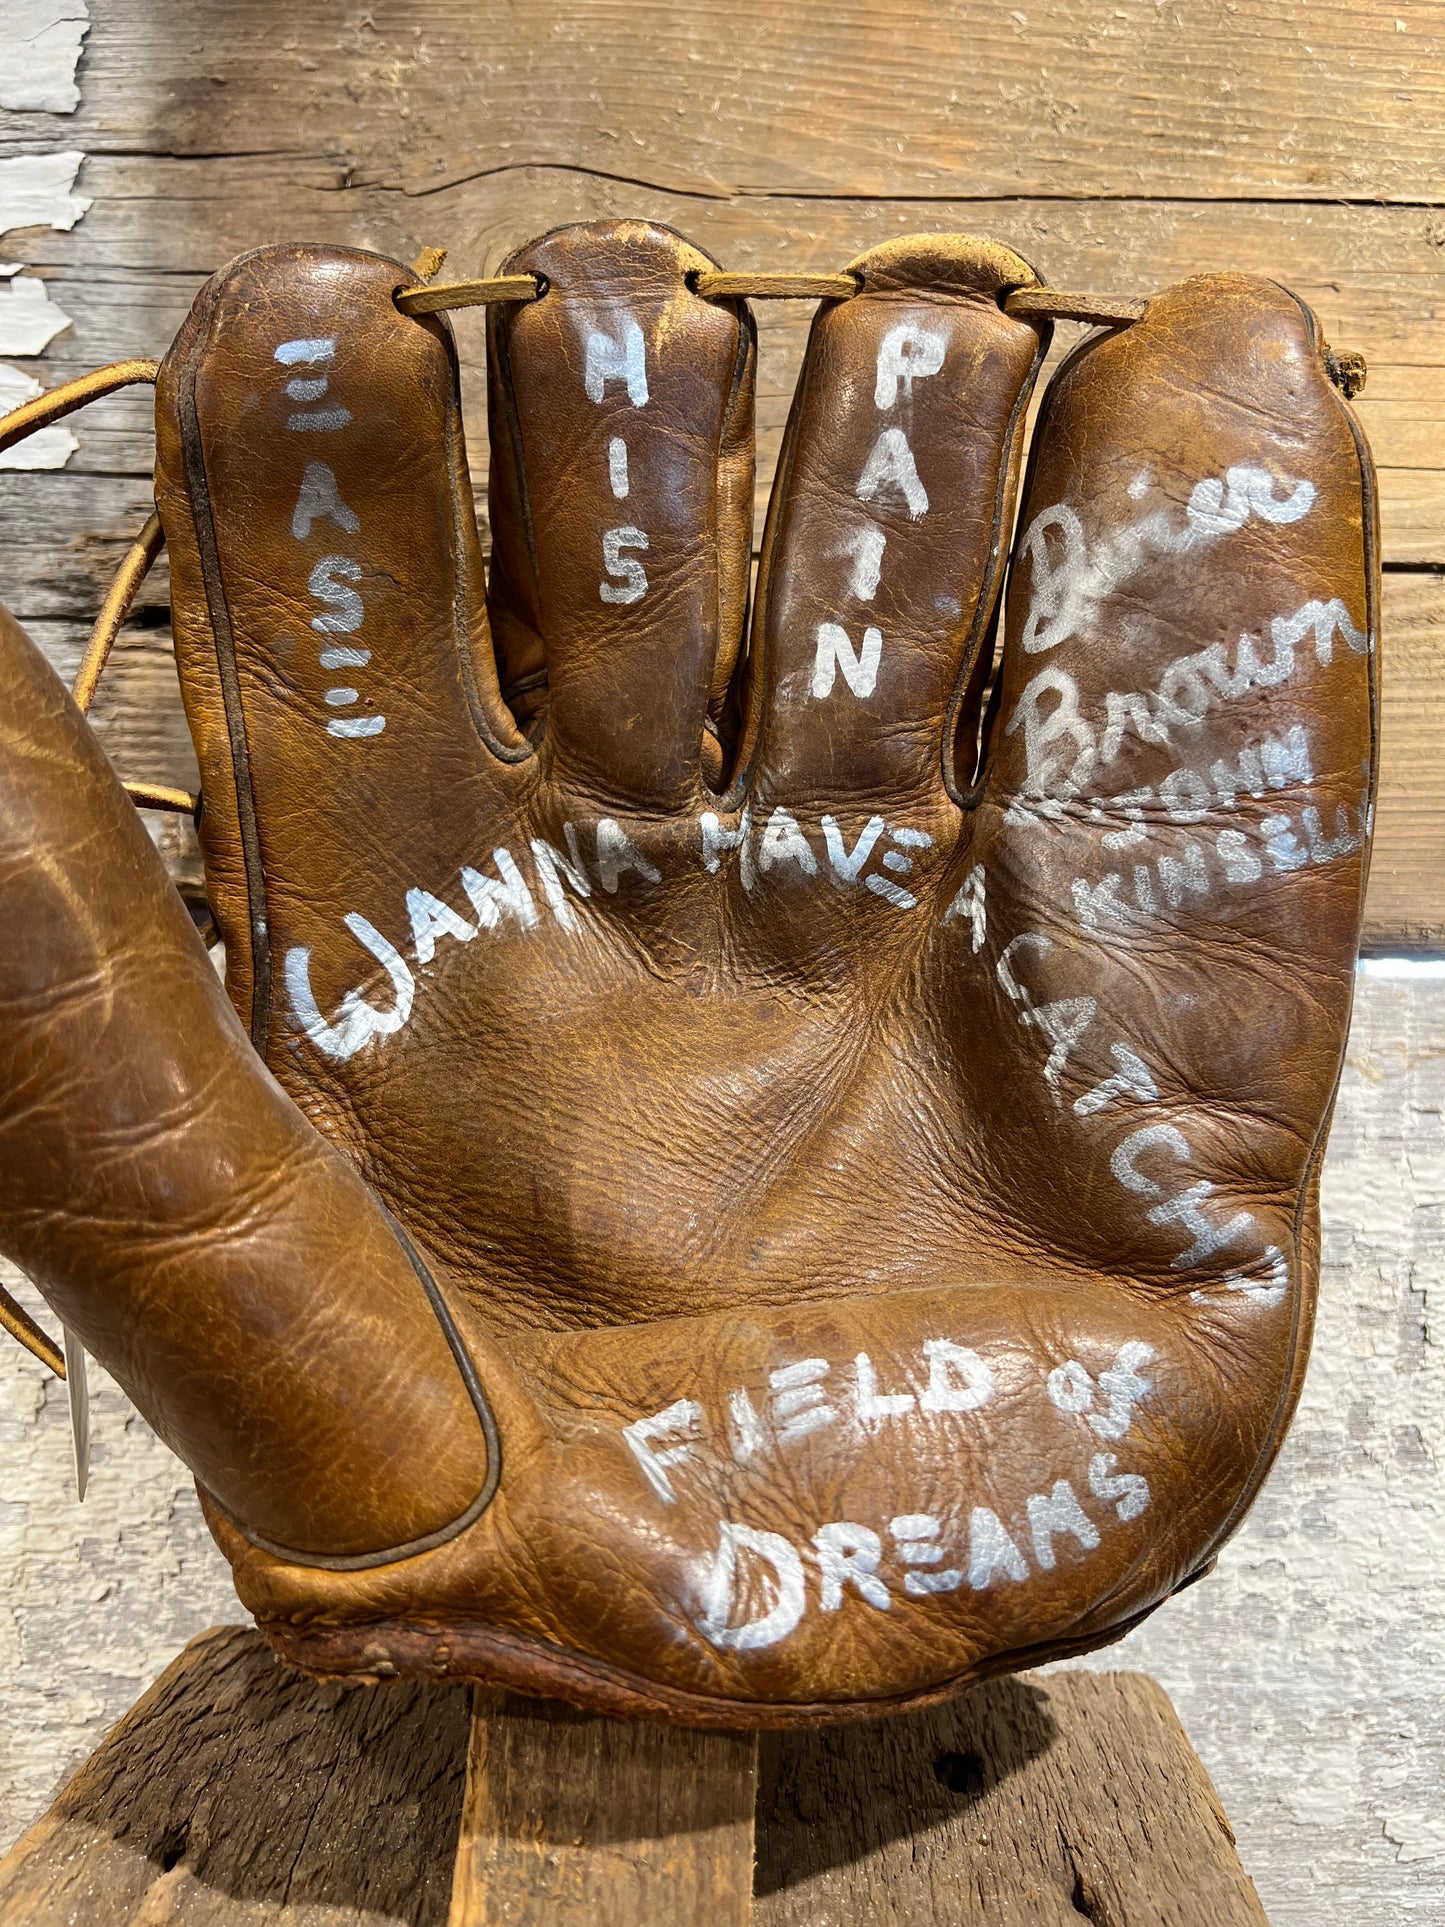 Dwier Brown Signed Baseball Glove Antique (pre 1965) Signed